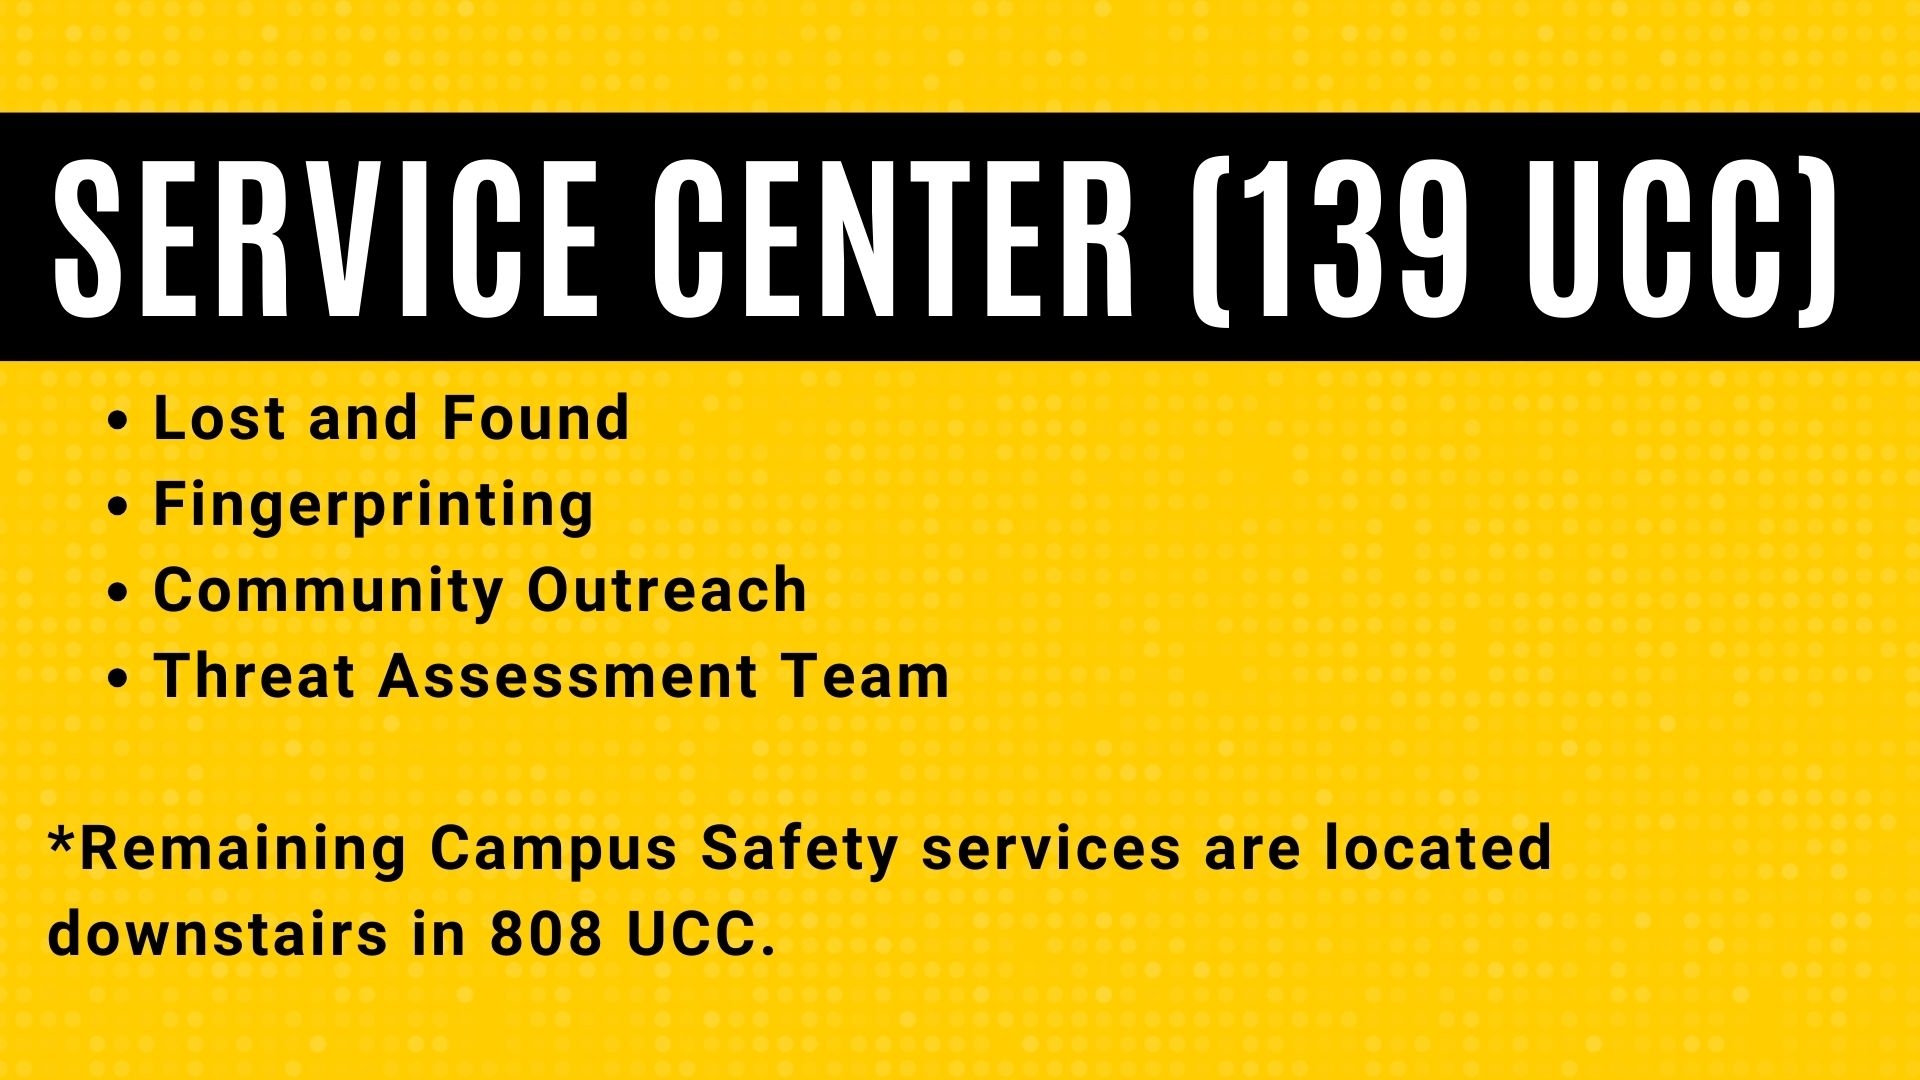 Service Center 139 UCC